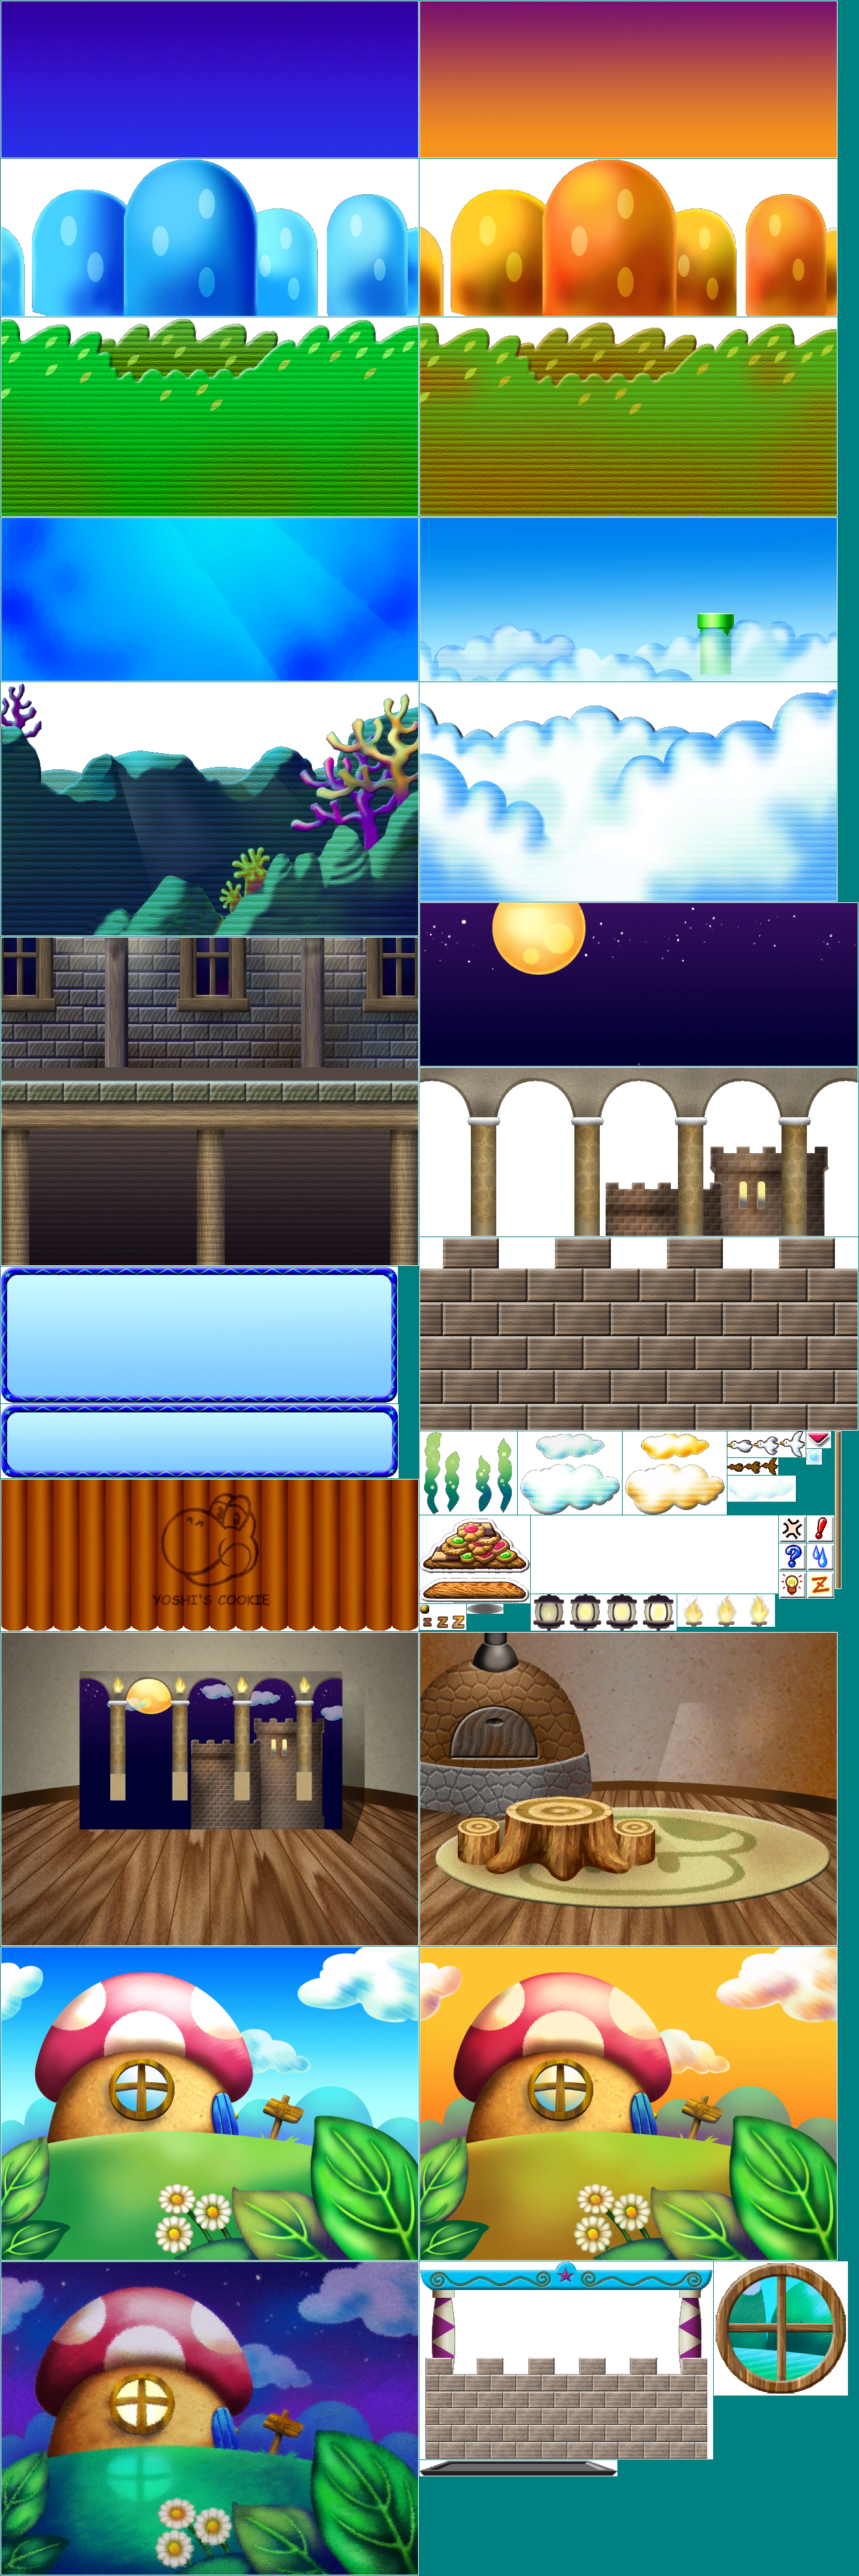 Nintendo Puzzle Collection (JPN) - Story Scenary